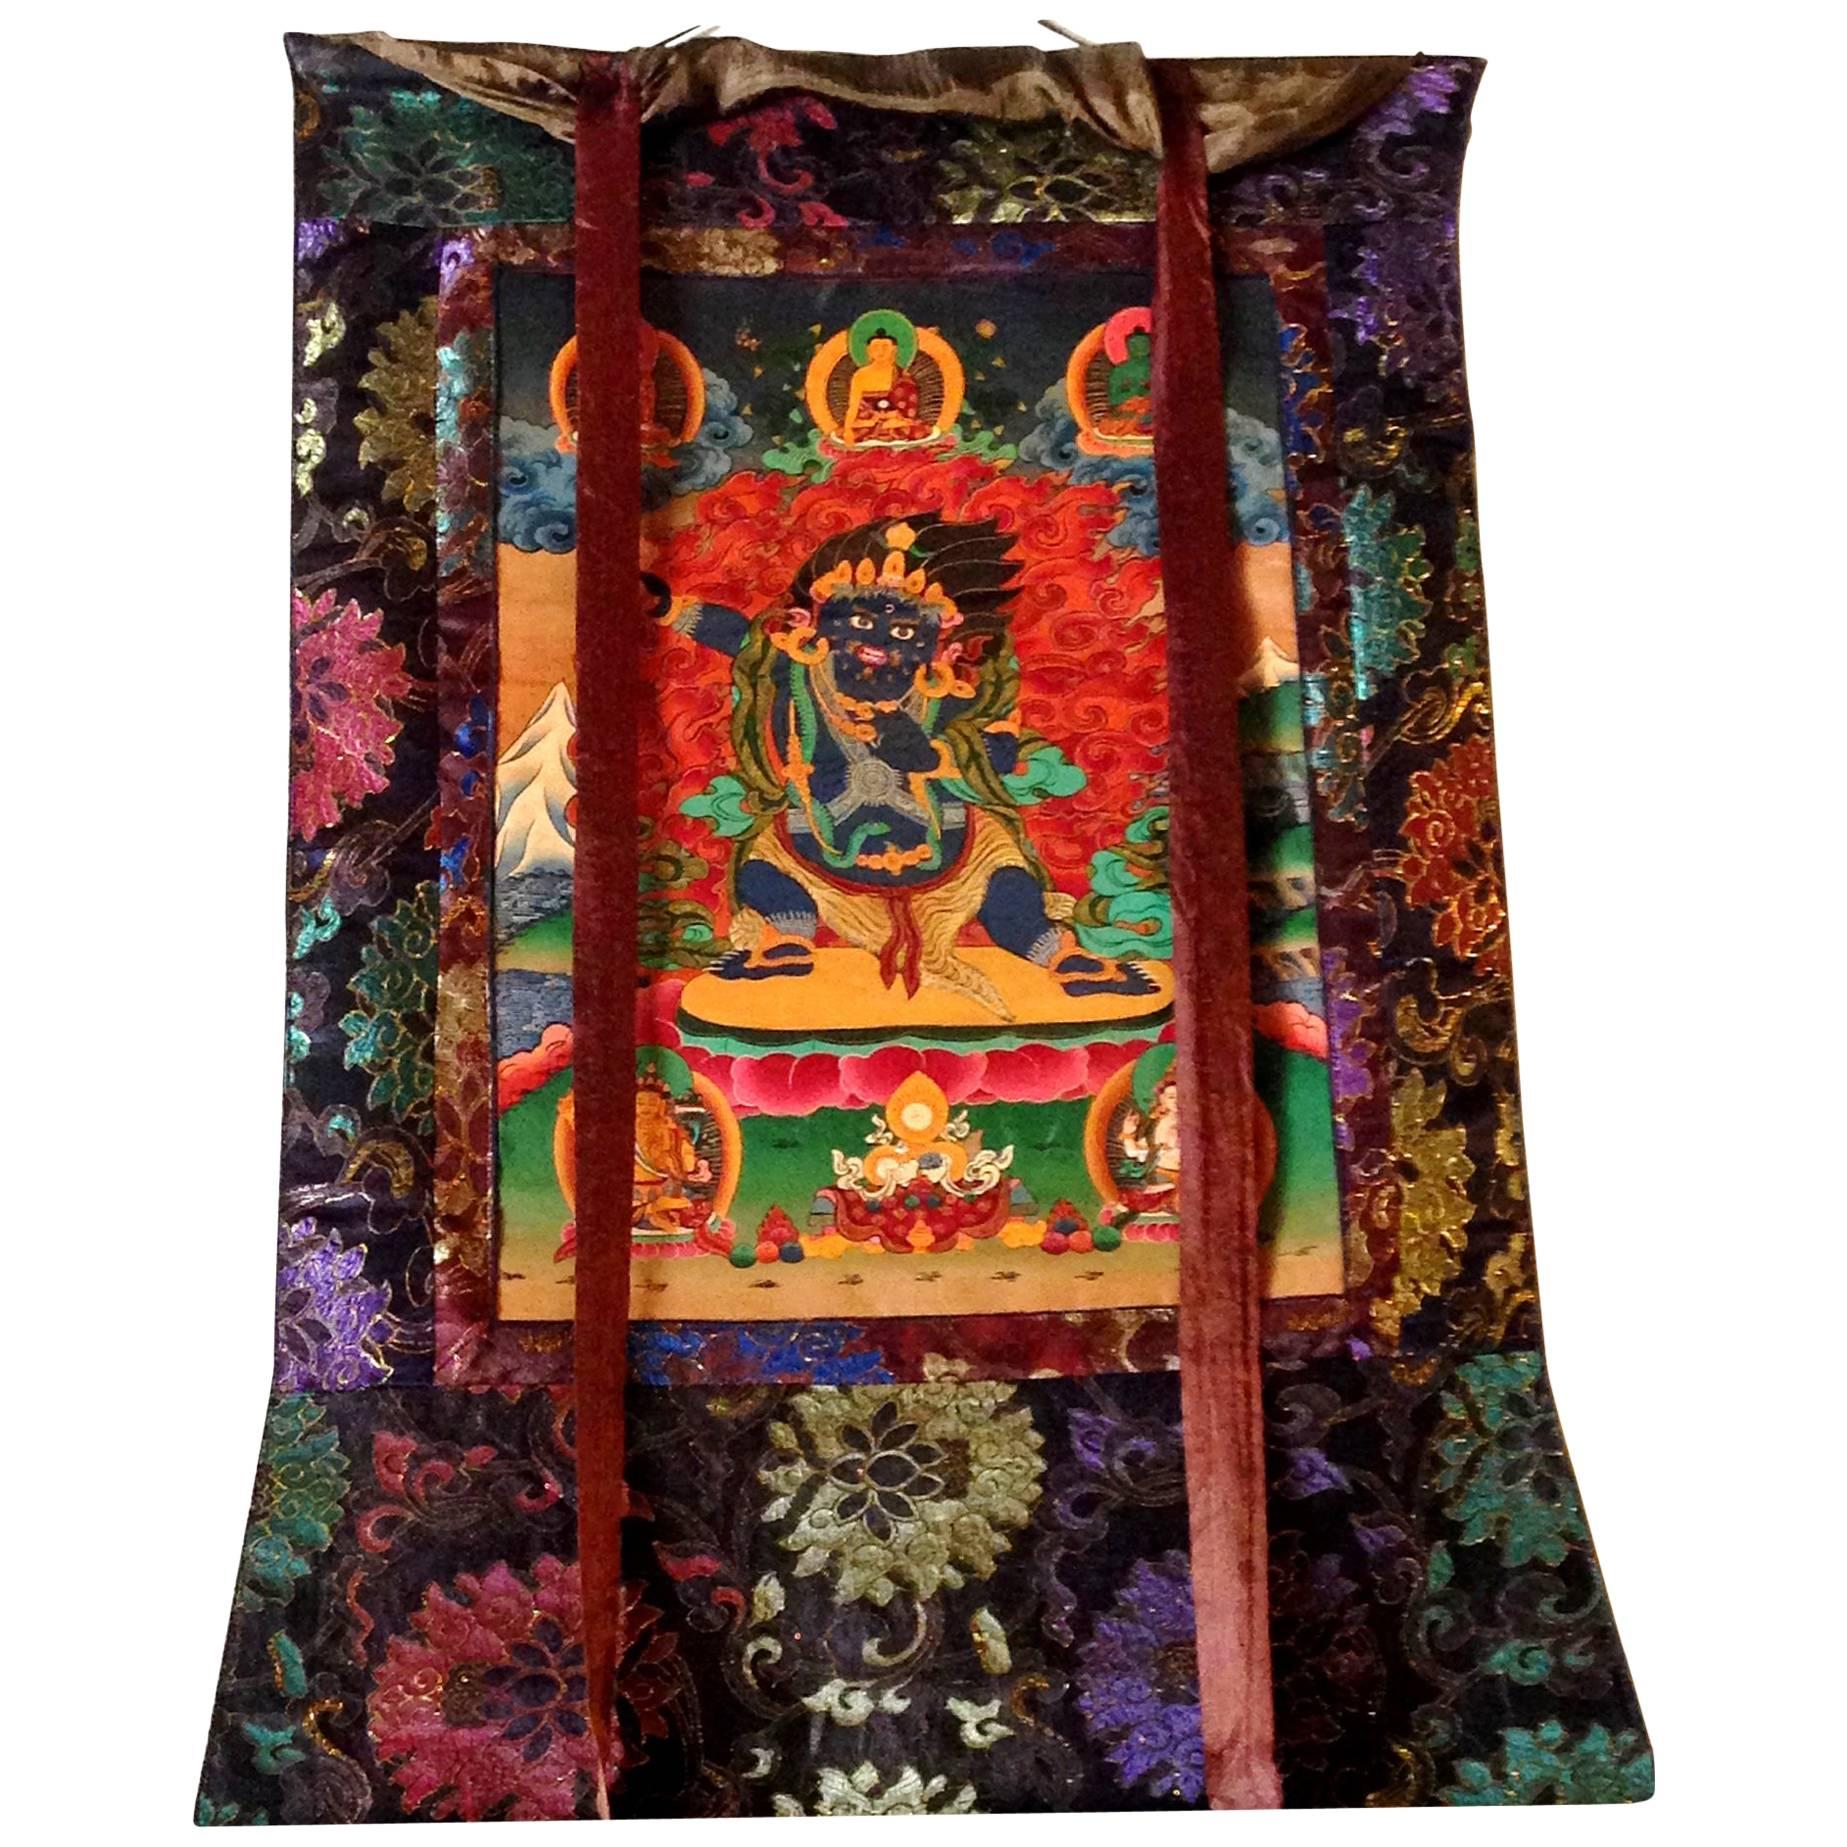 Tibetan Thanka Dorje Drolo, Hand-Painted